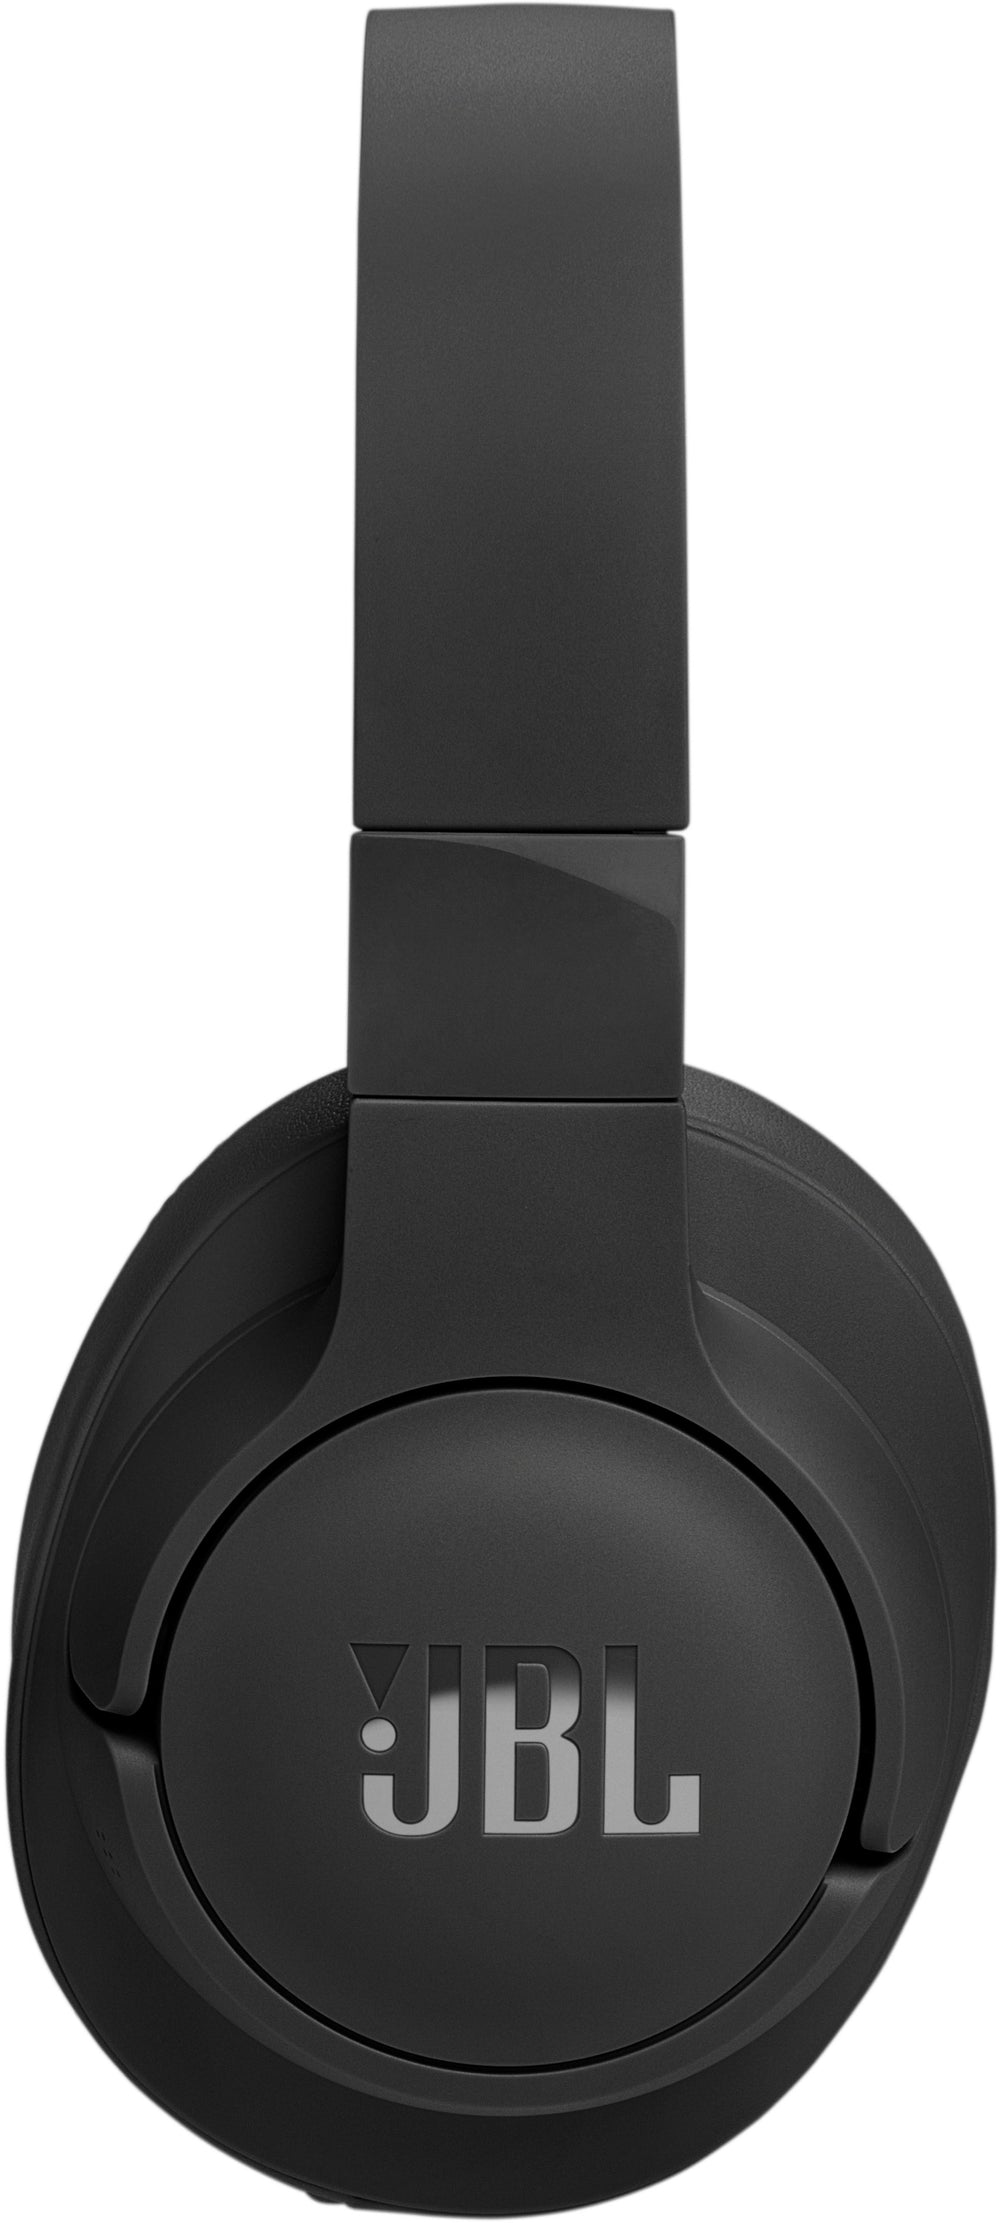 JBL - Adaptive Noise Cancelling Wireless Over-Ear Headphone - Black_1